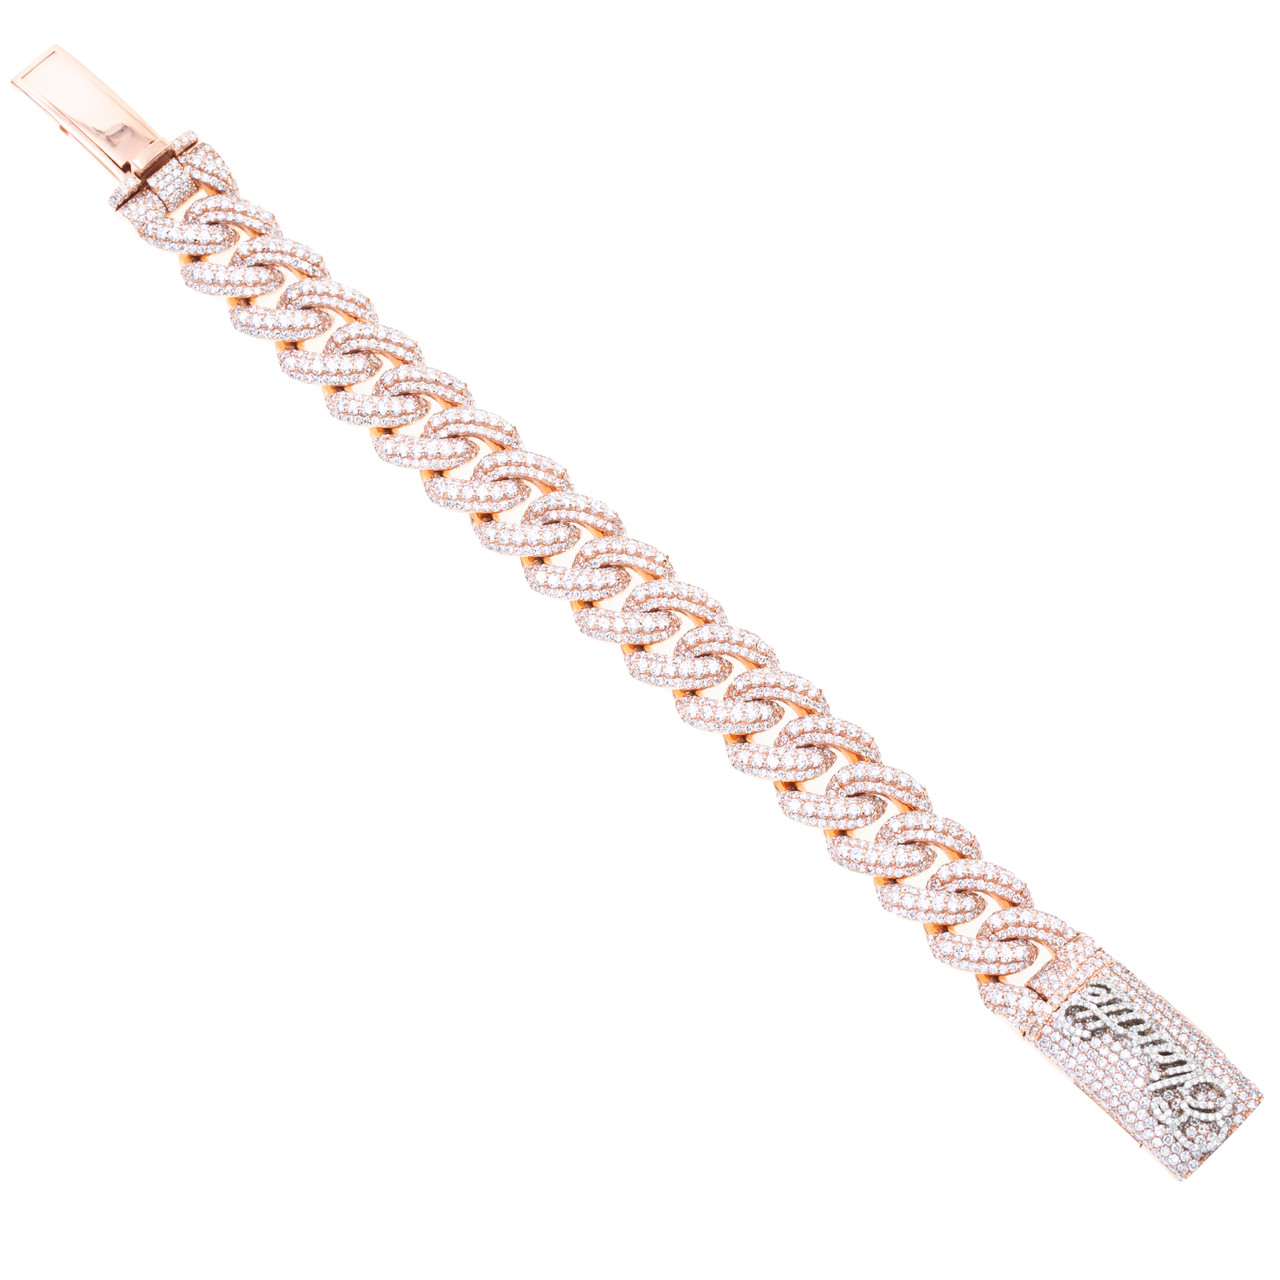 14K Rose Gold Diamond Cuban Link Bracelet 24.8CT - Eliantte & Co